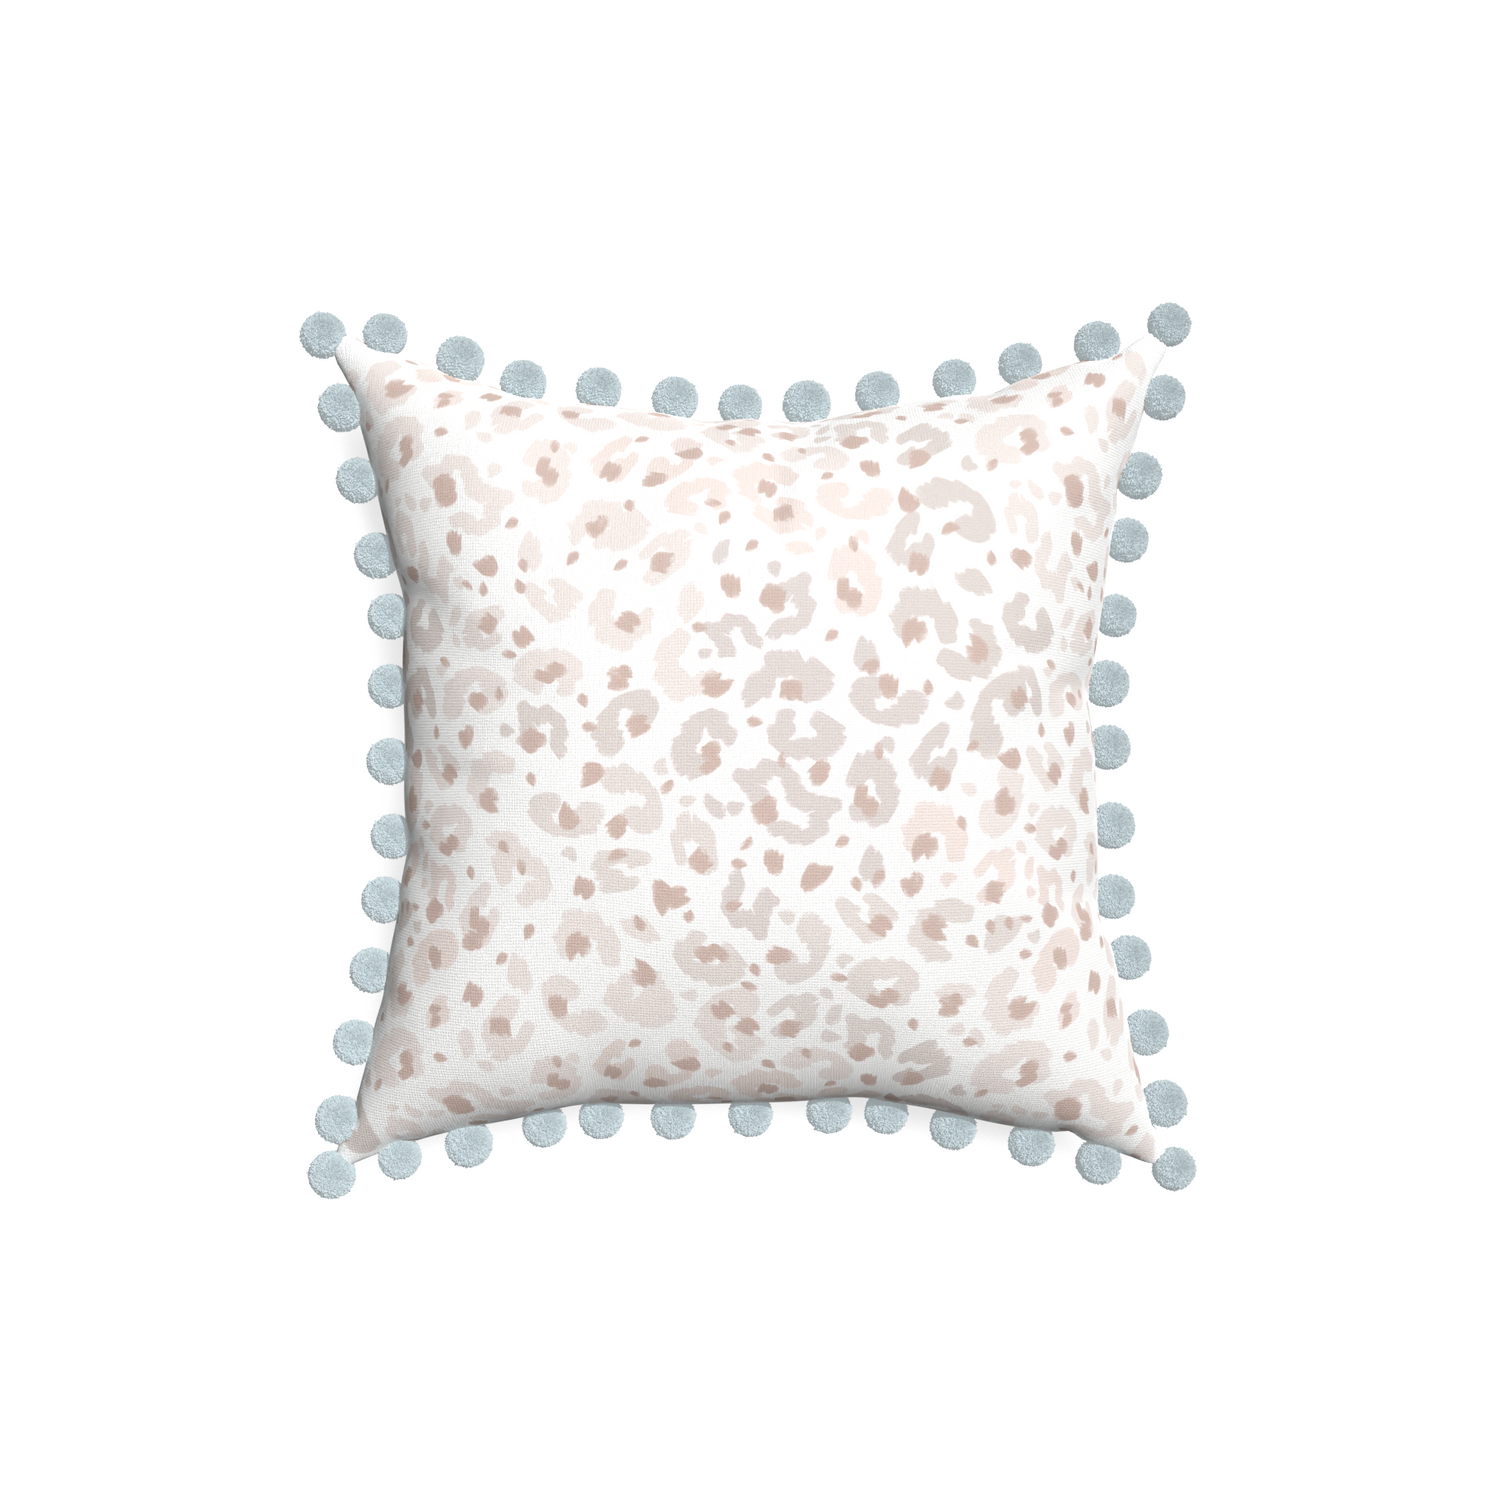 18-square rosie custom pillow with powder pom pom on white background